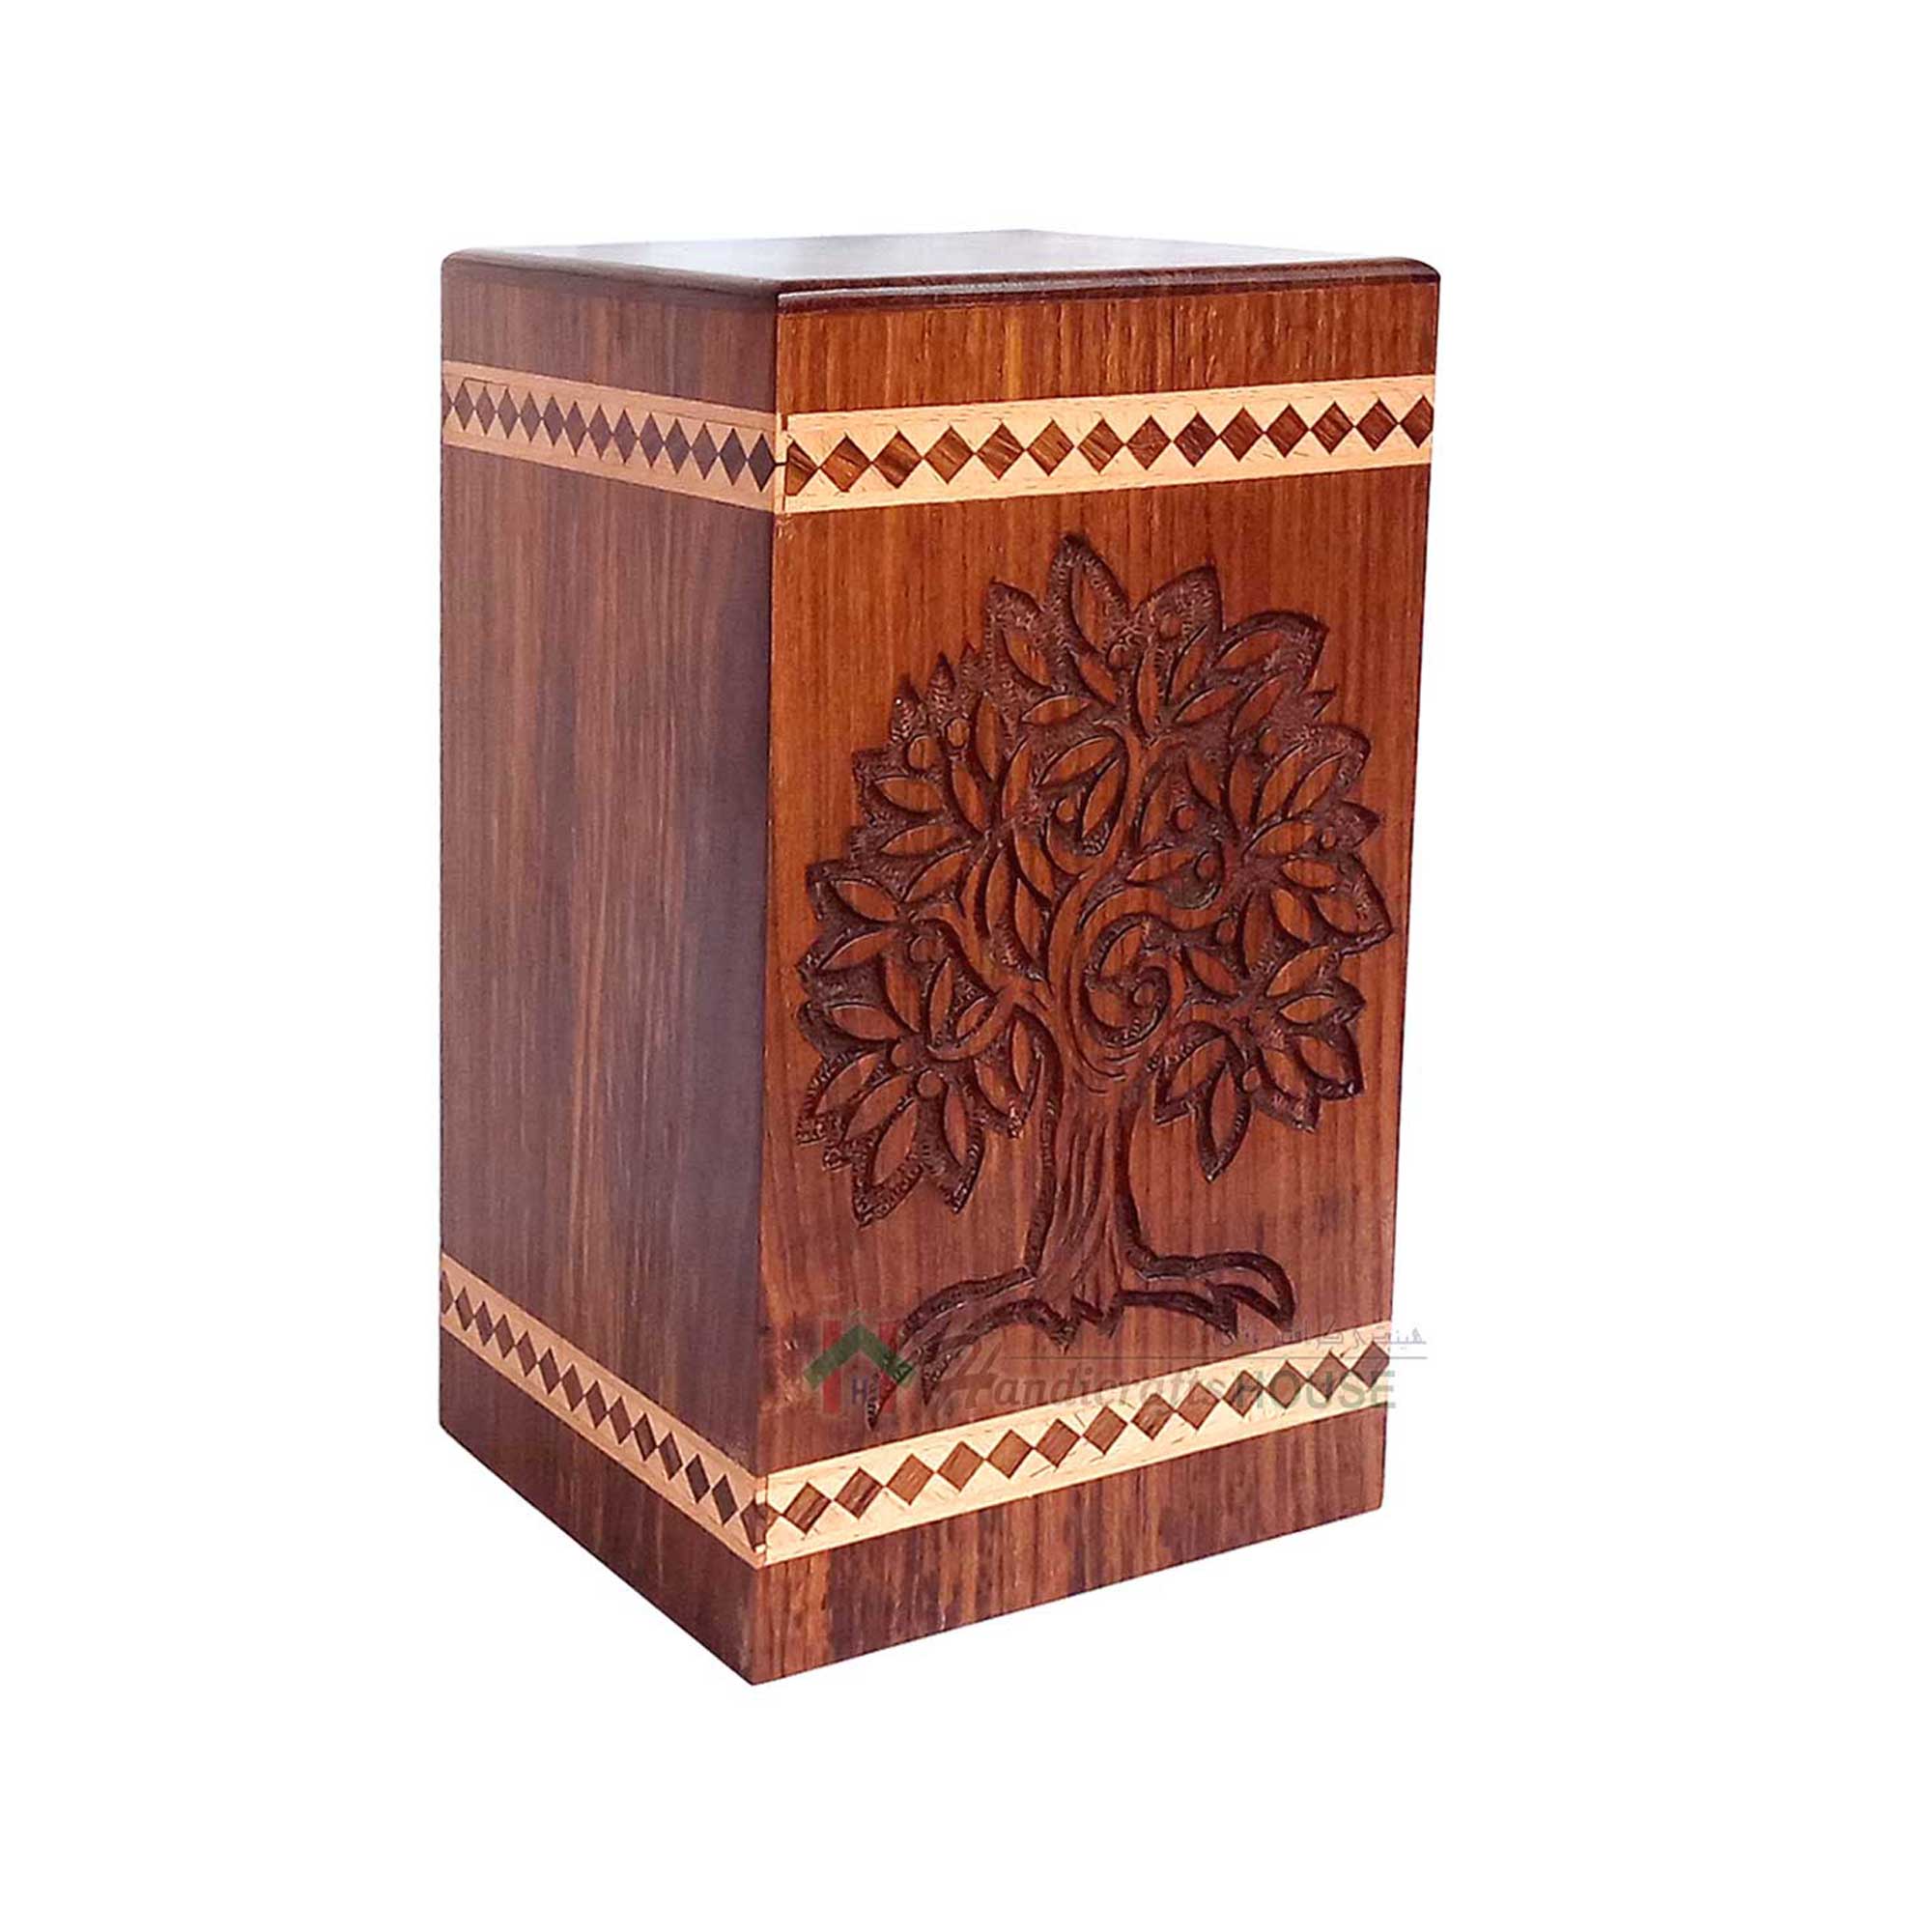 Wooden Urn For Ashes - Wood keepsake, Decorative Timber Urns